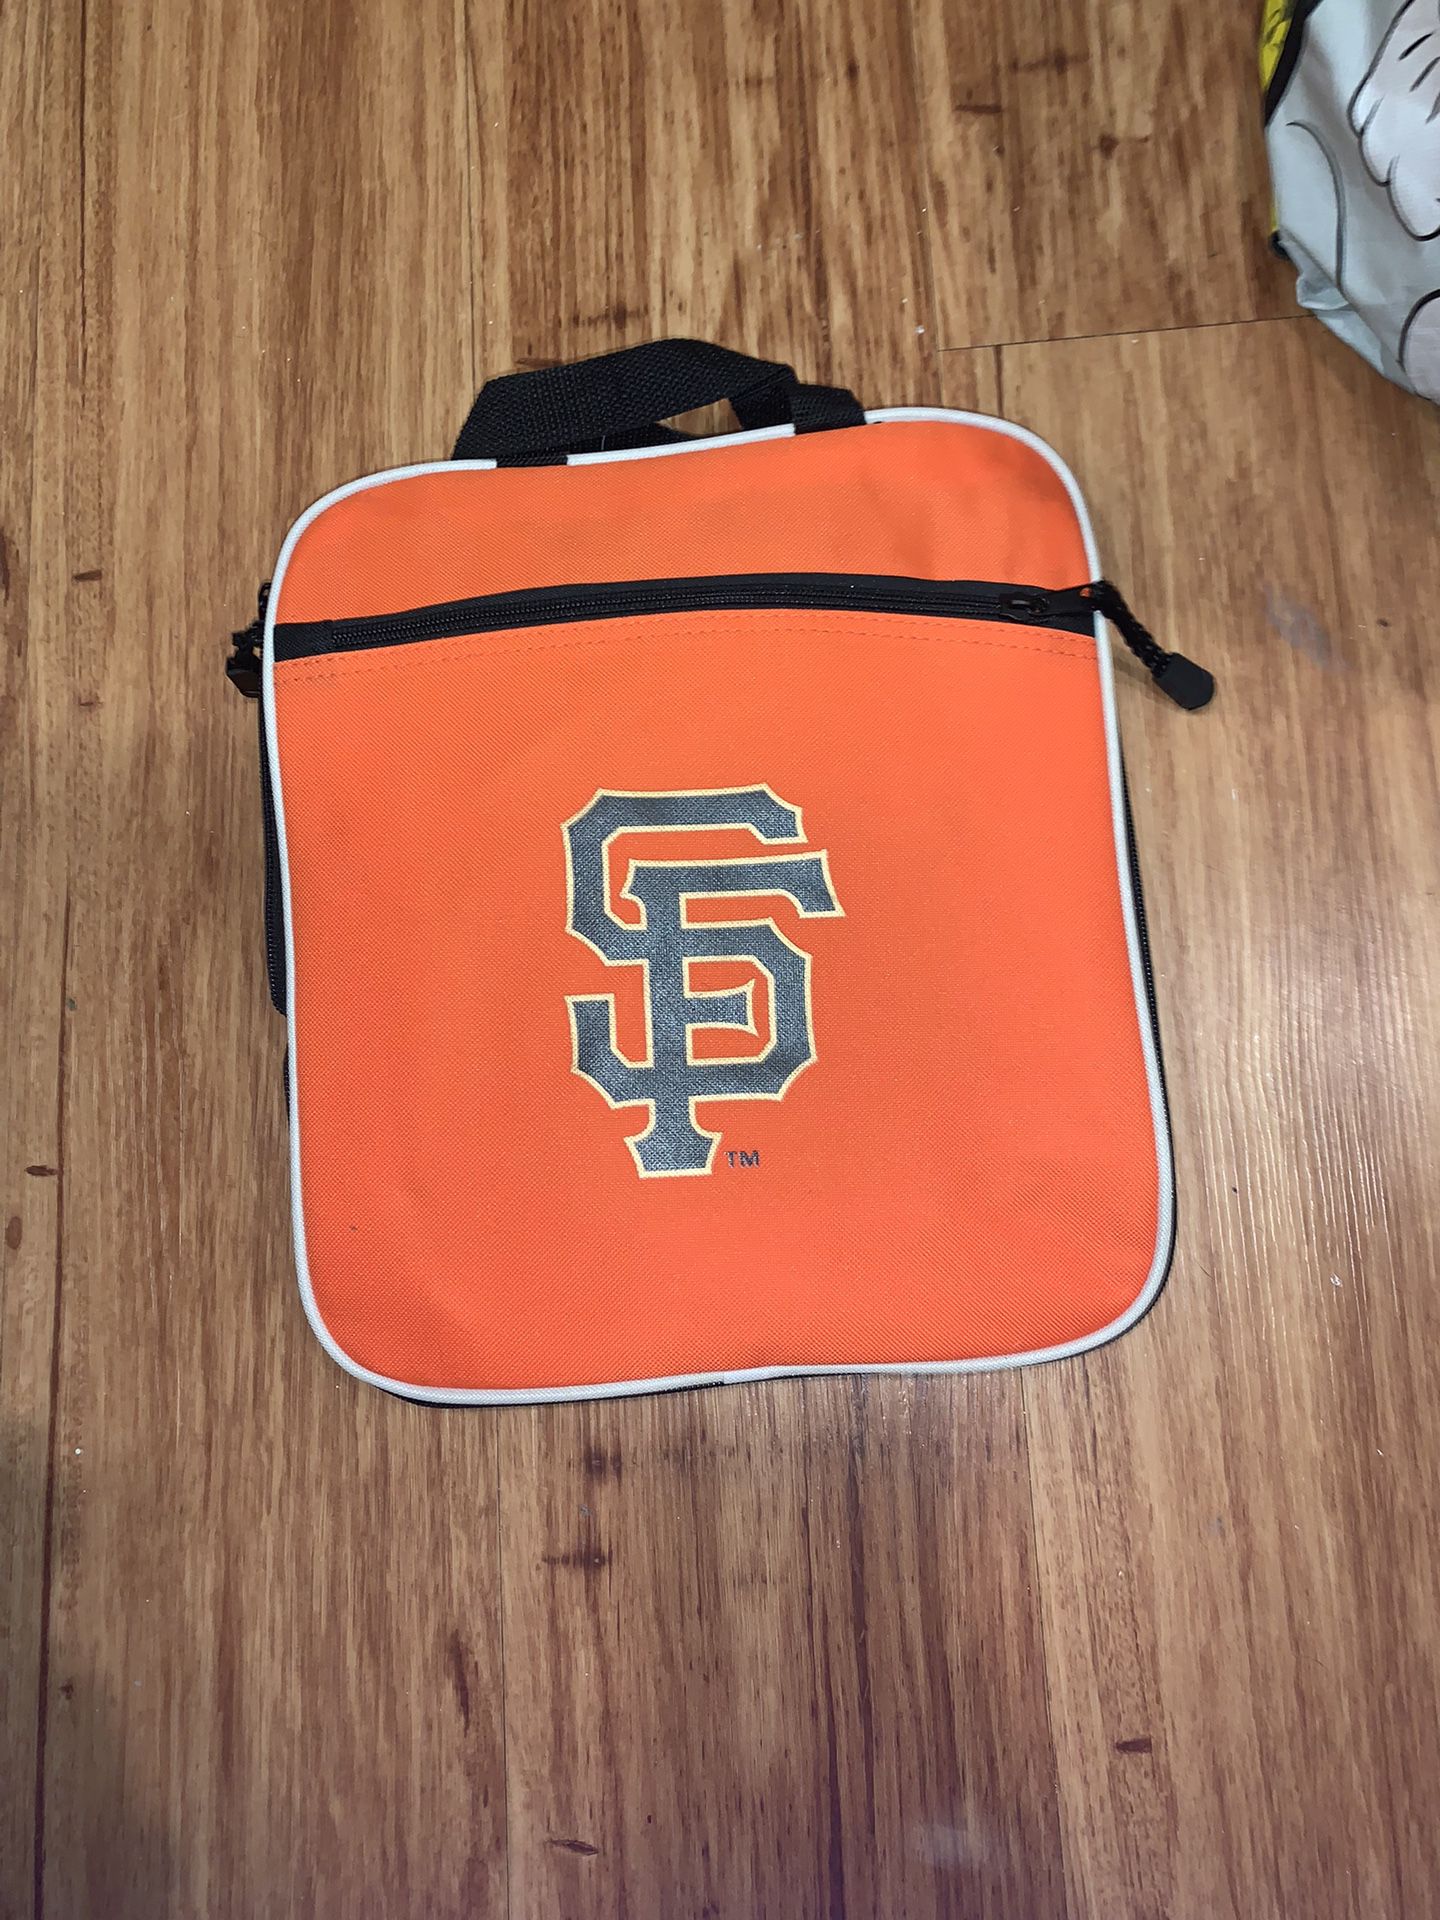 SF Giants Duffle Bag 